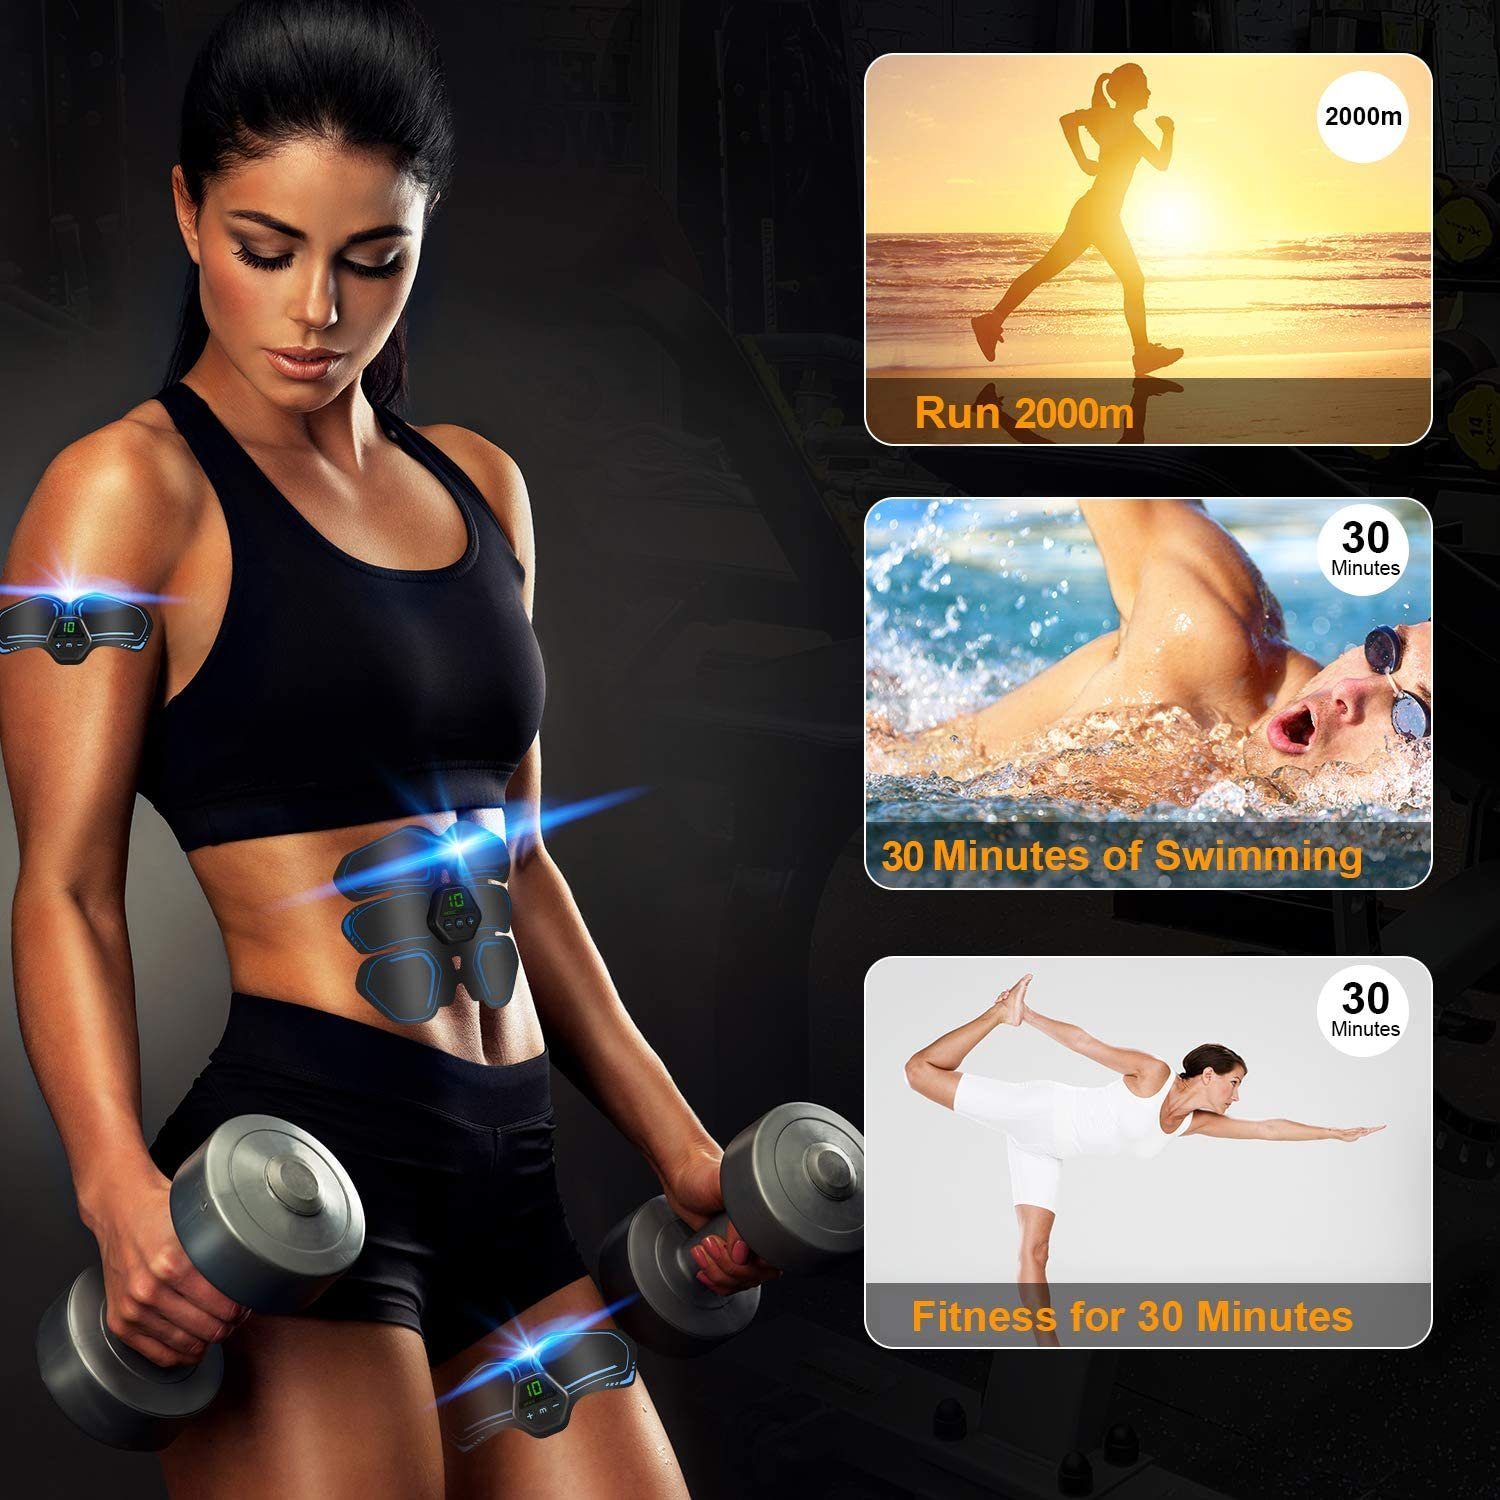 Bildschirm 10 Fitness-Gerät, Smart Bauchtrainer Trainingsgerät,Muskelstimulator 20 EMS Modi zum Blau ABS/Bauch/Arm/Bein XDeer Intensitäten,LCD